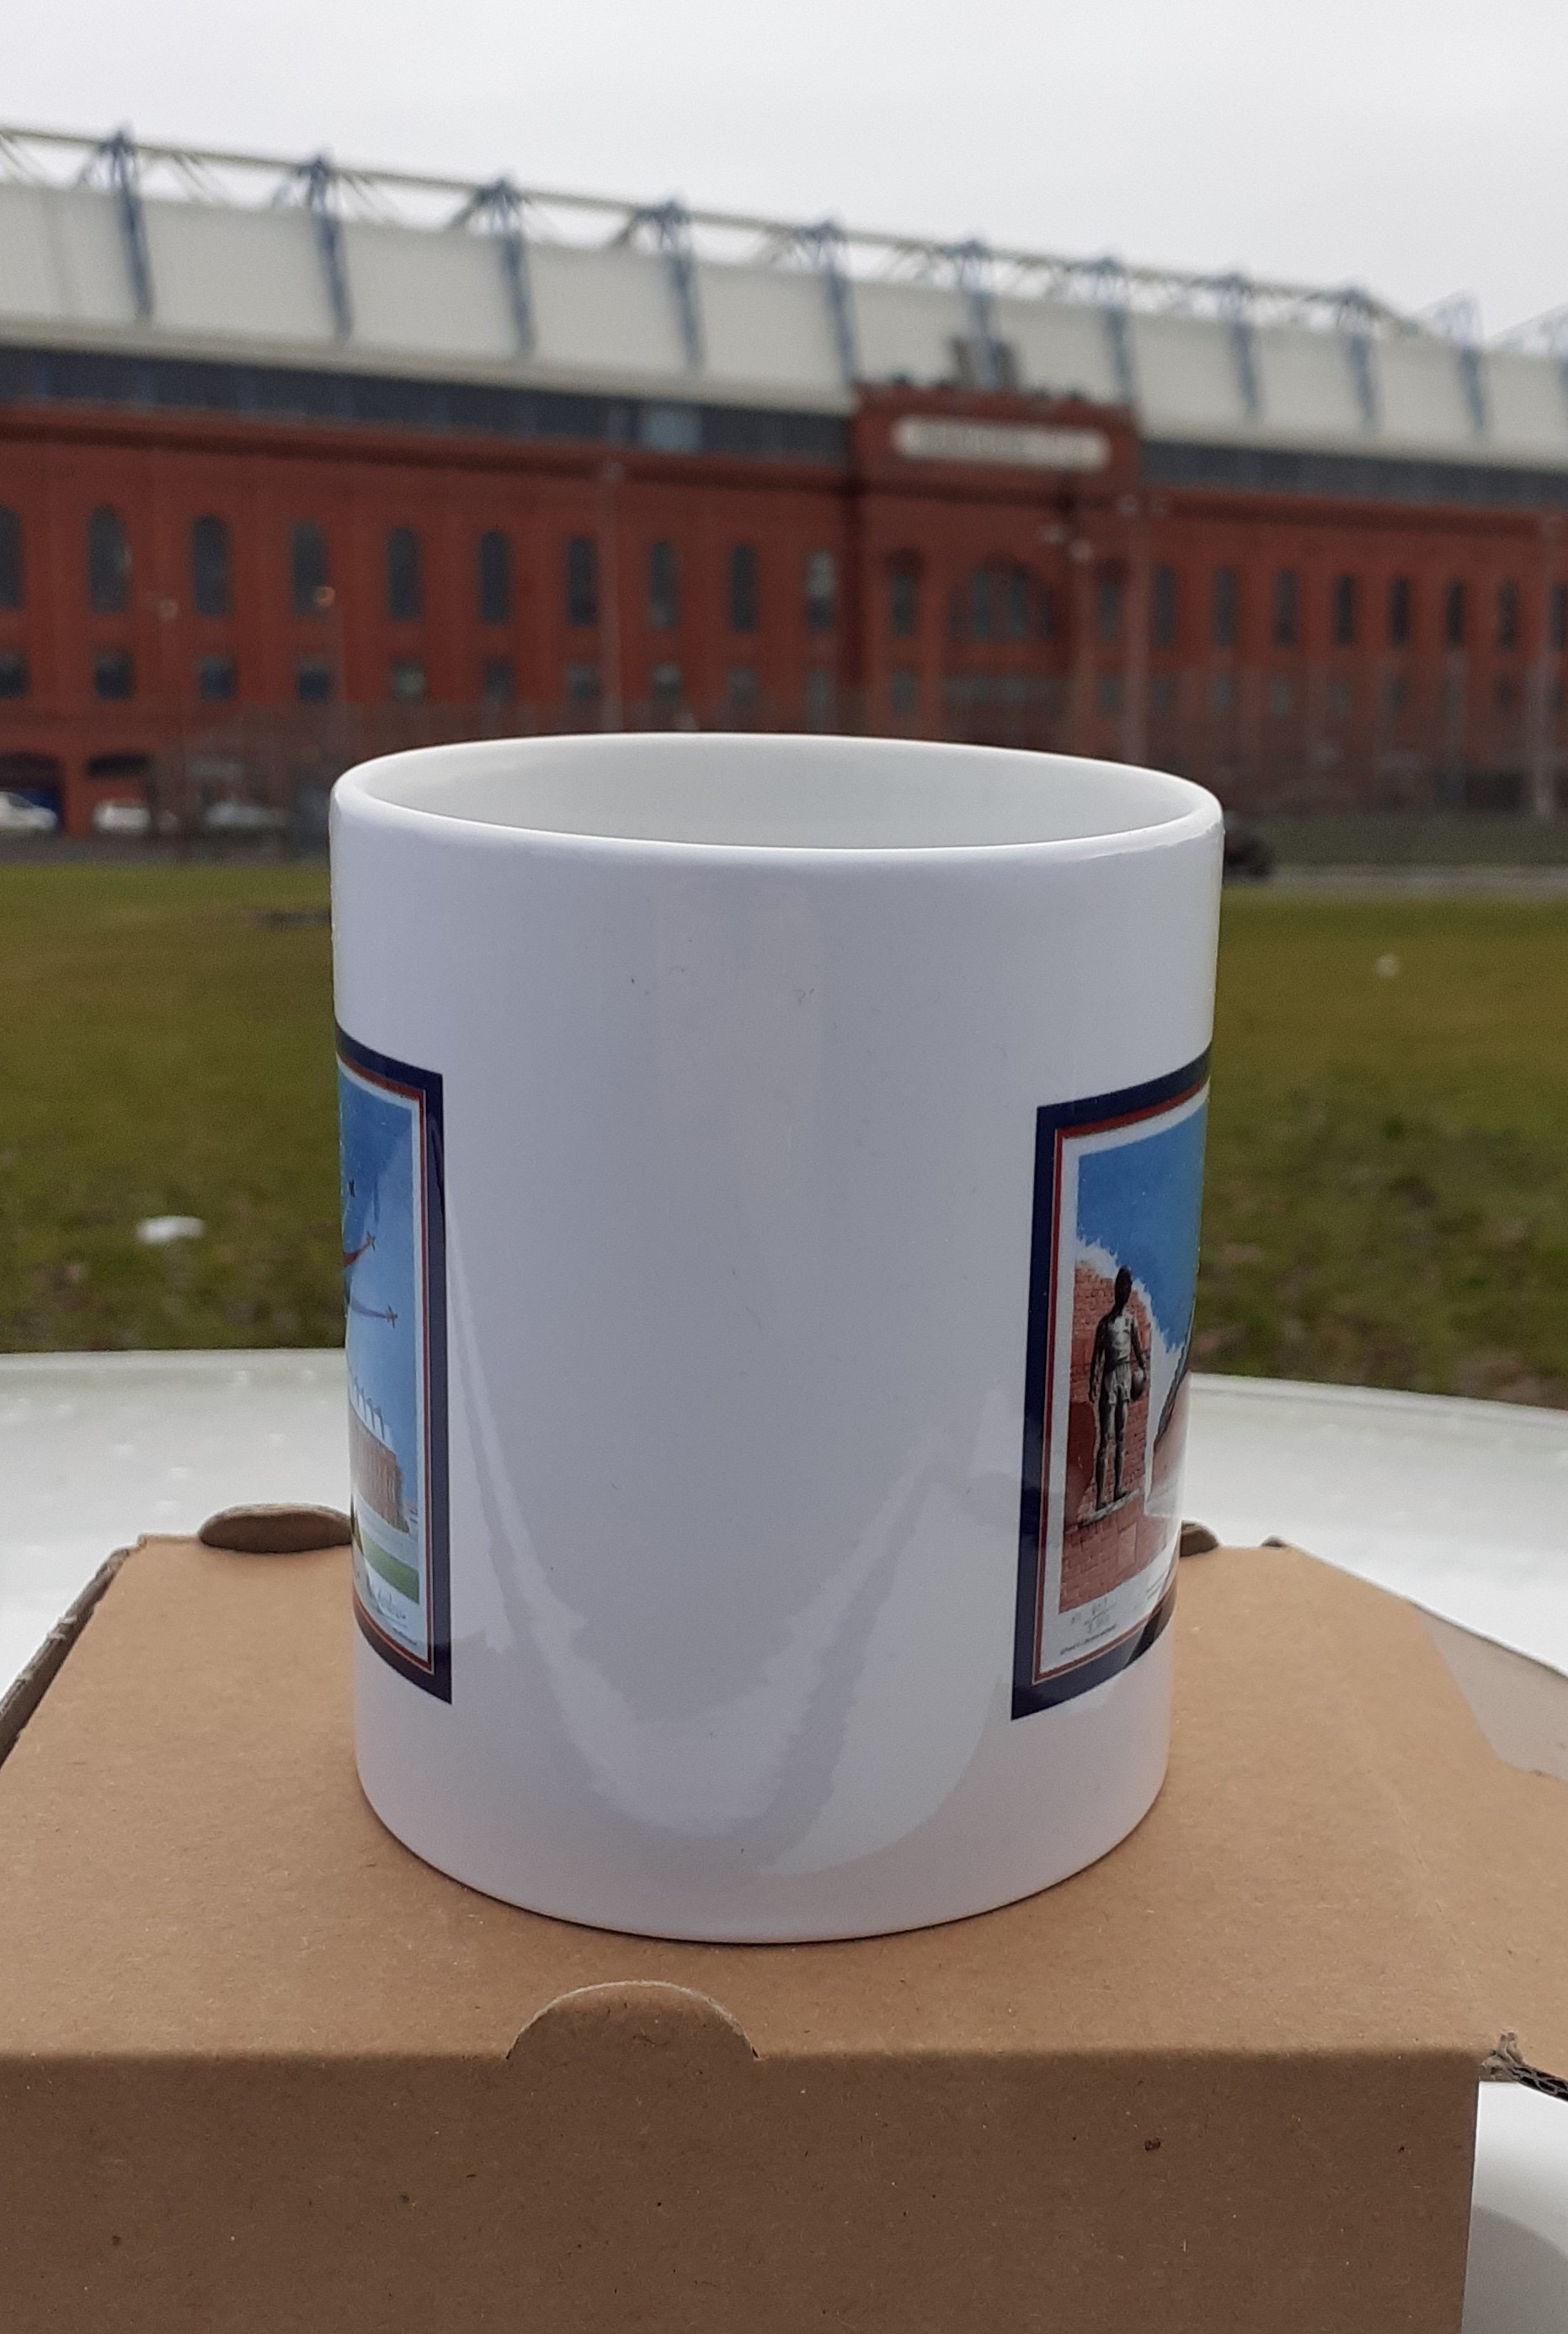 'Watching Over'/'Ibrox Display' Rangers FC coffee mug